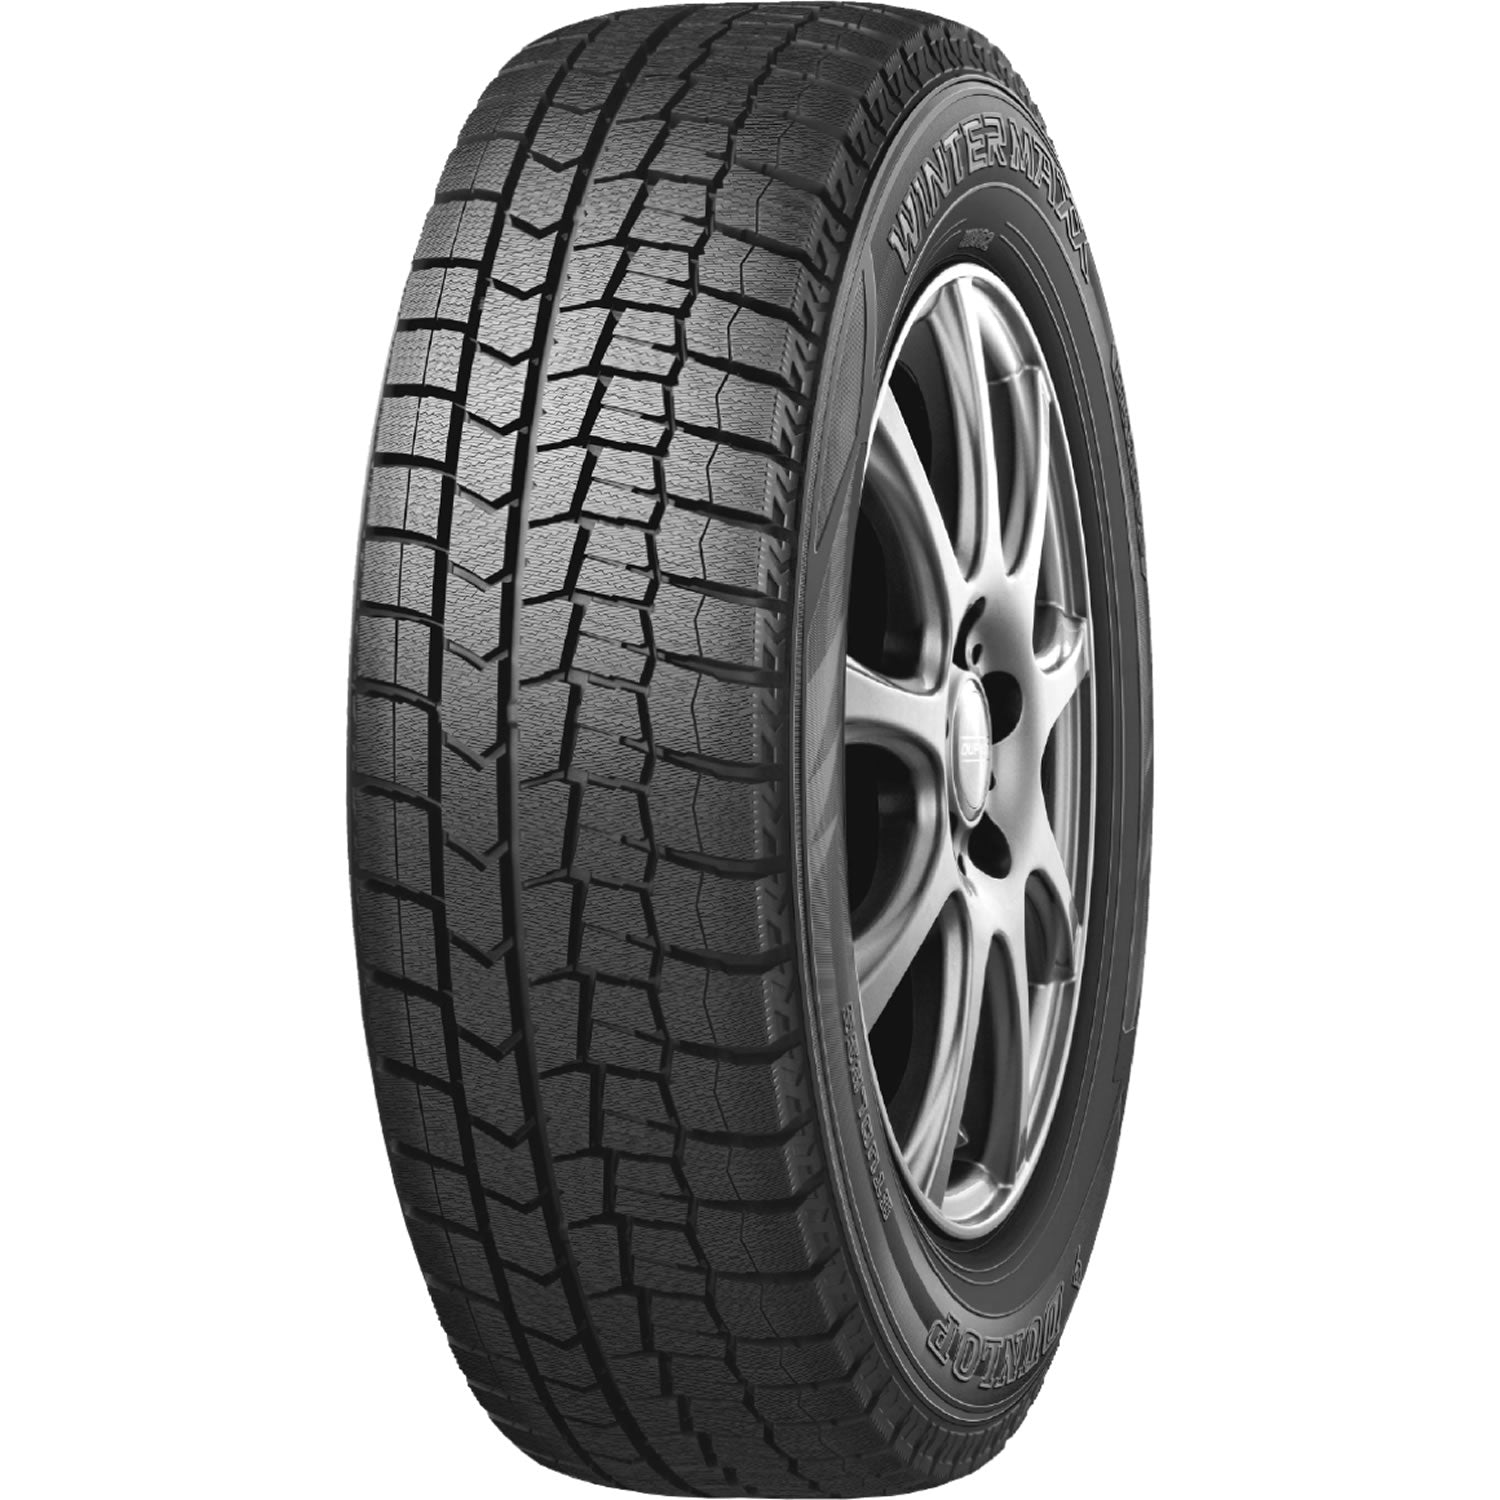 DUNLOP WINTER MAXX 2 215/45R17 (24.7X8.4R 17) Tires